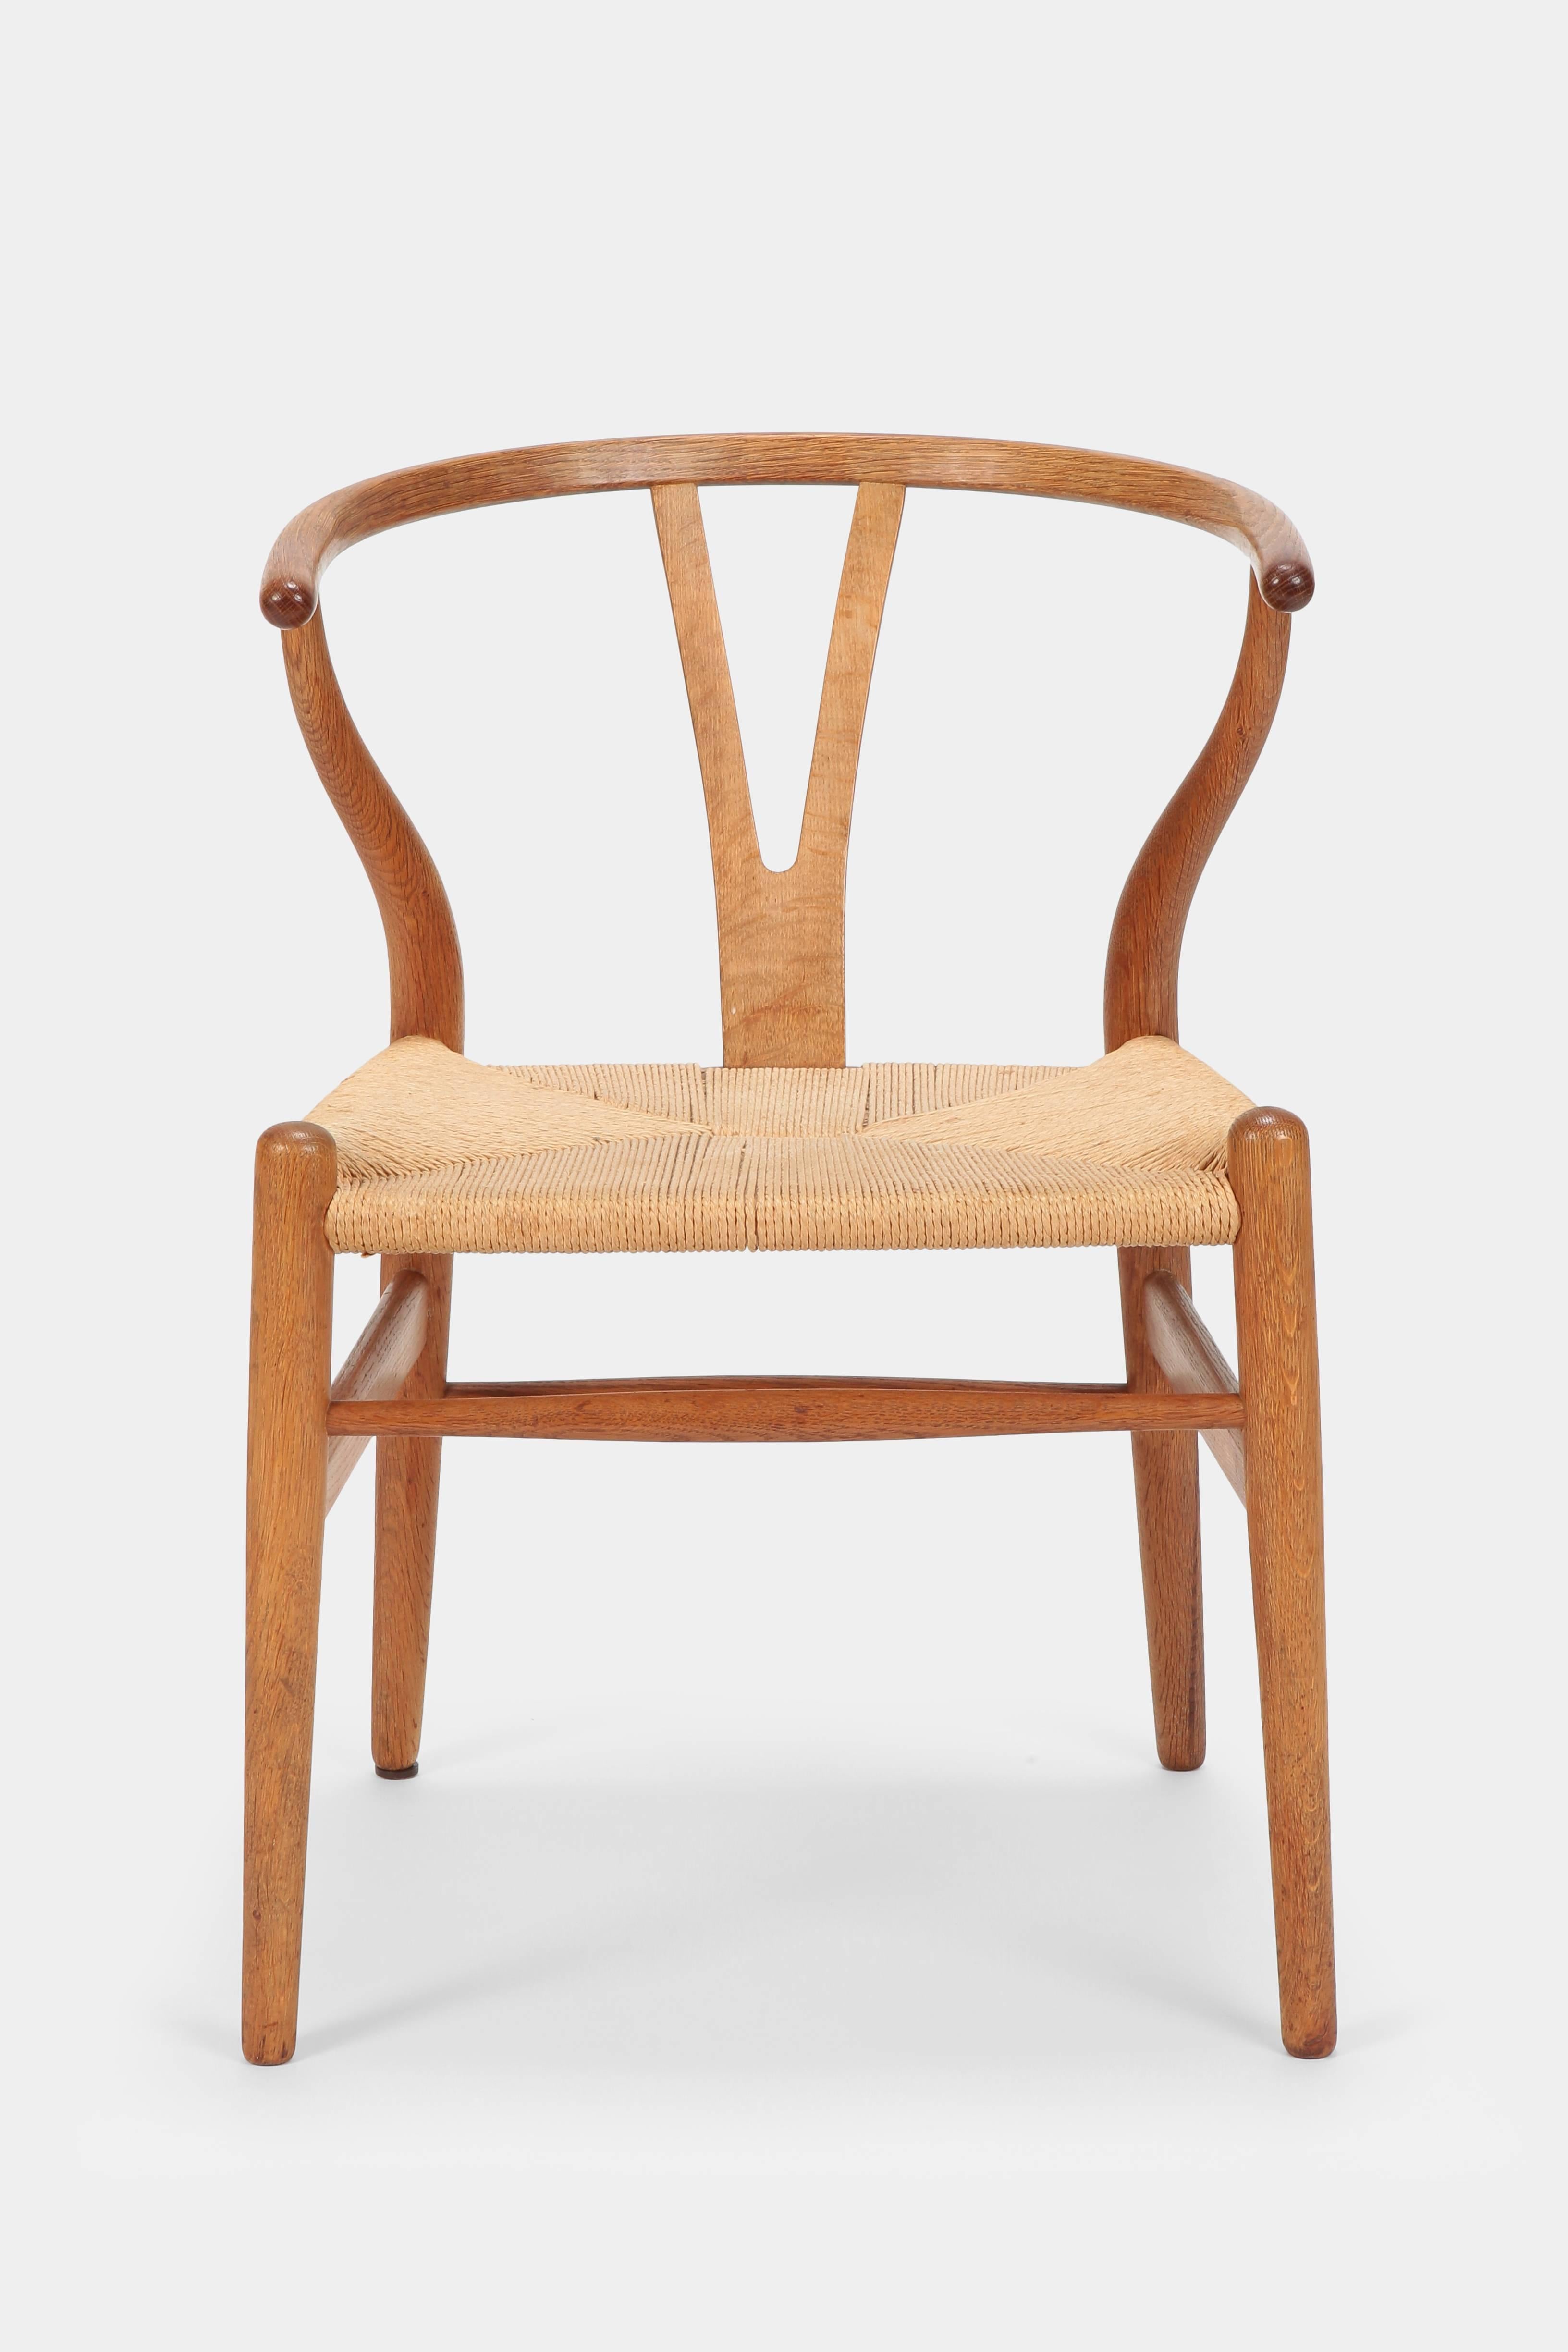 Cord Hans J. Wegner “Y-Chairs” Model CH24 Carl Hansen & Son, 1950s